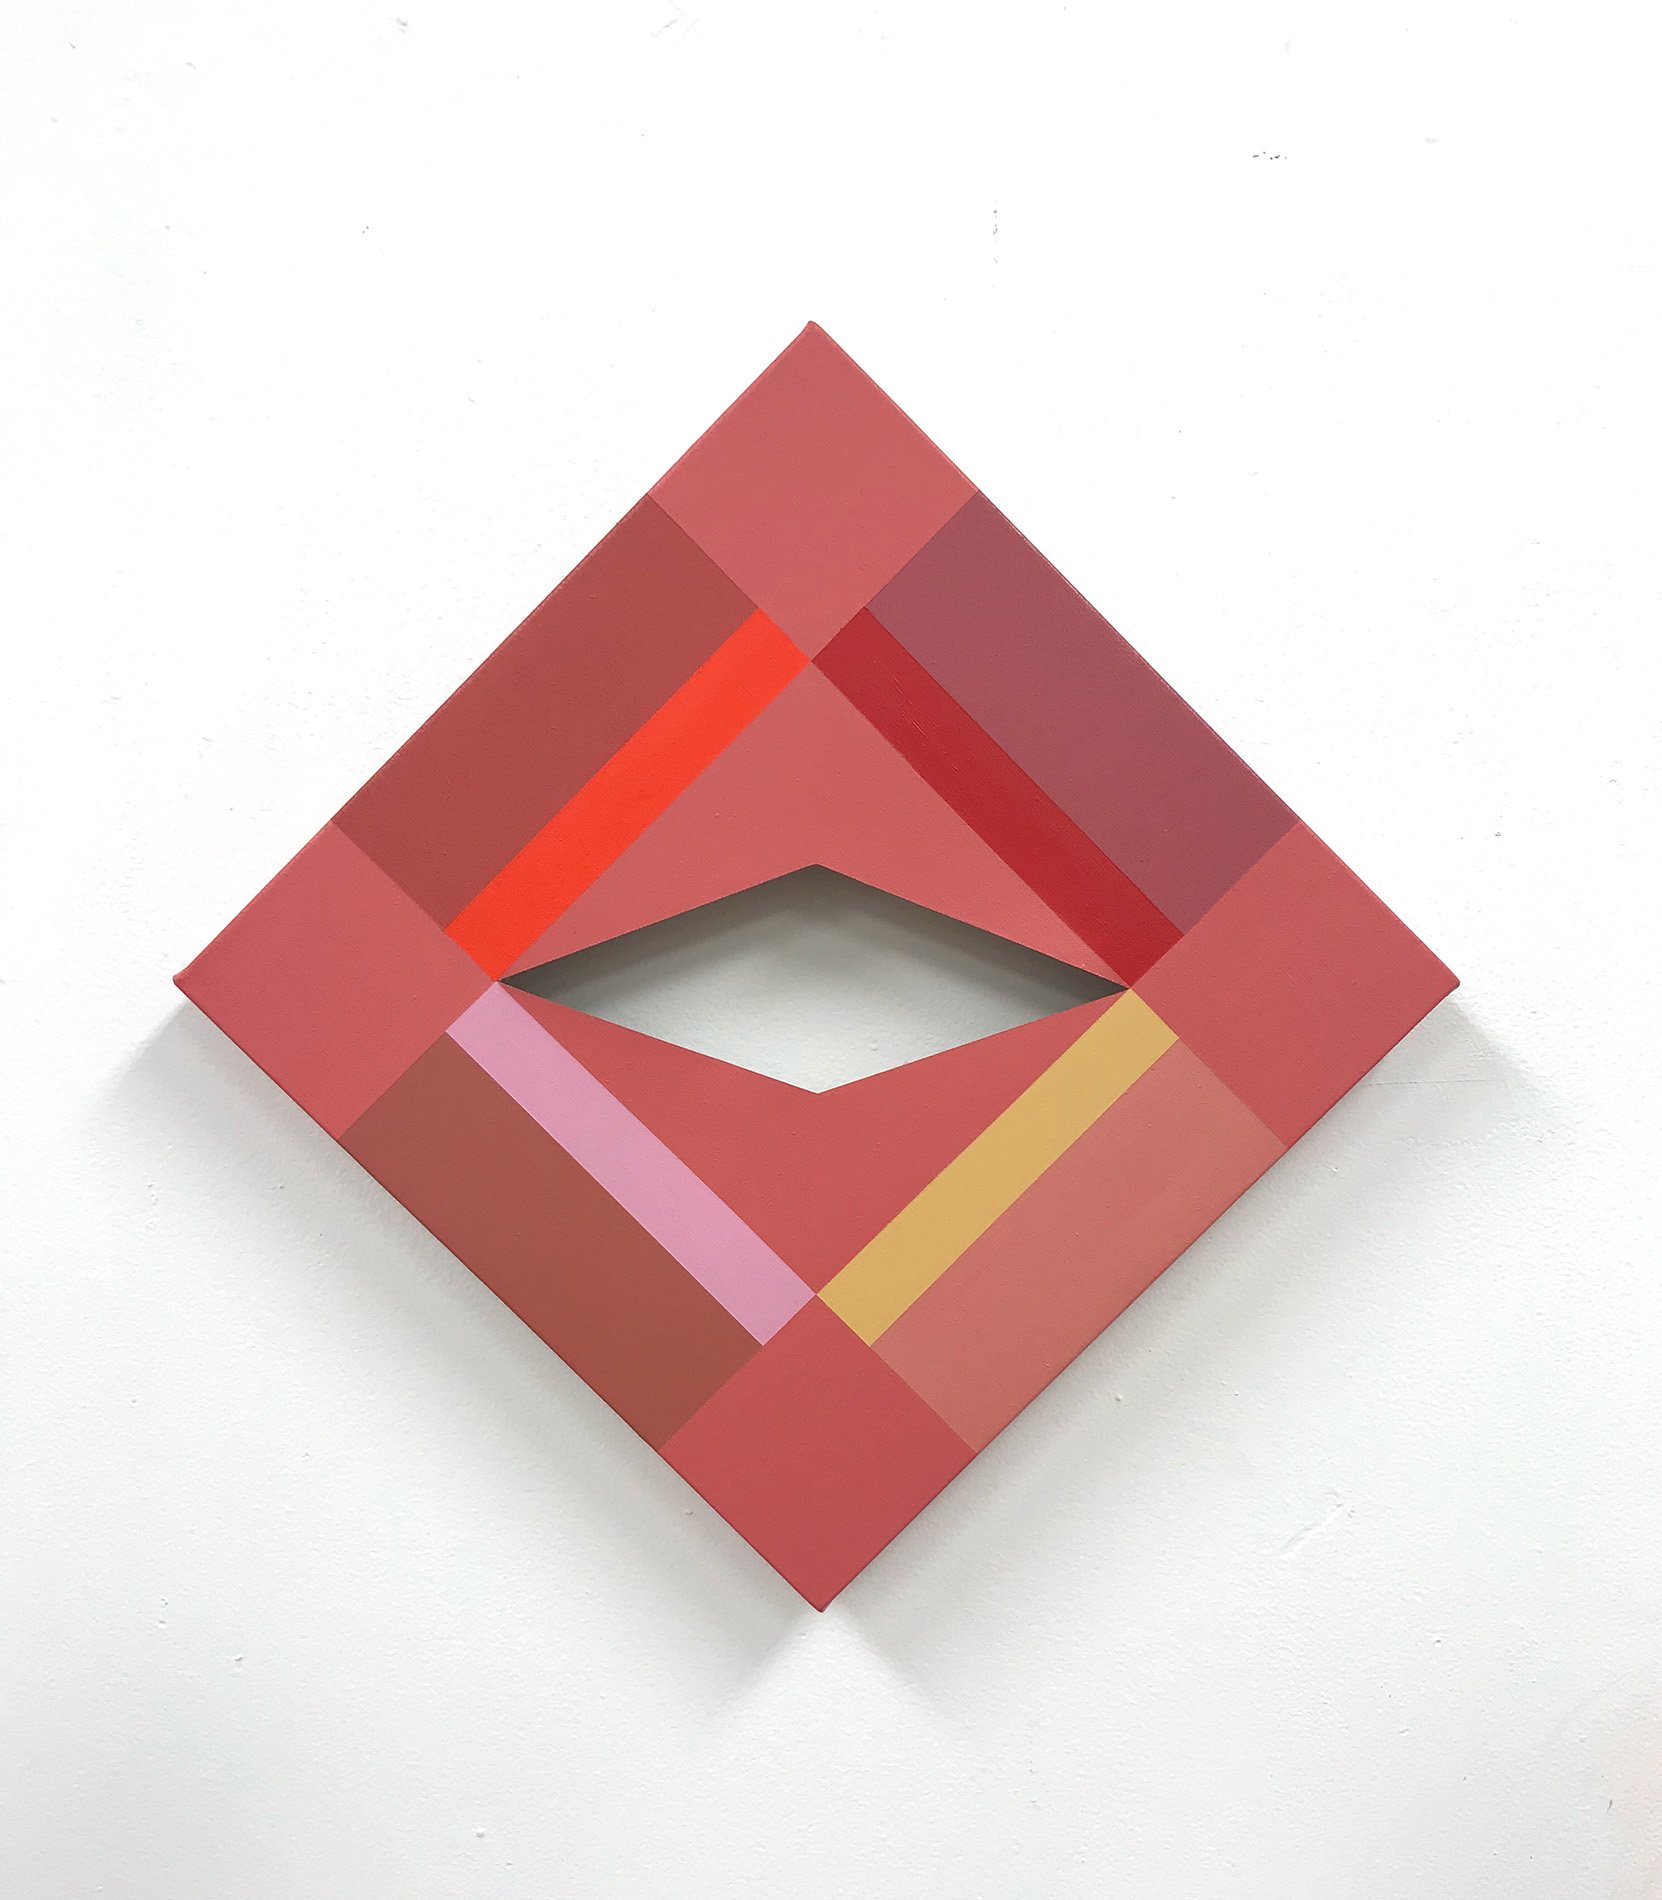   Meridian 24,  acrylic on cut linen, 17” x 17”, 2020 